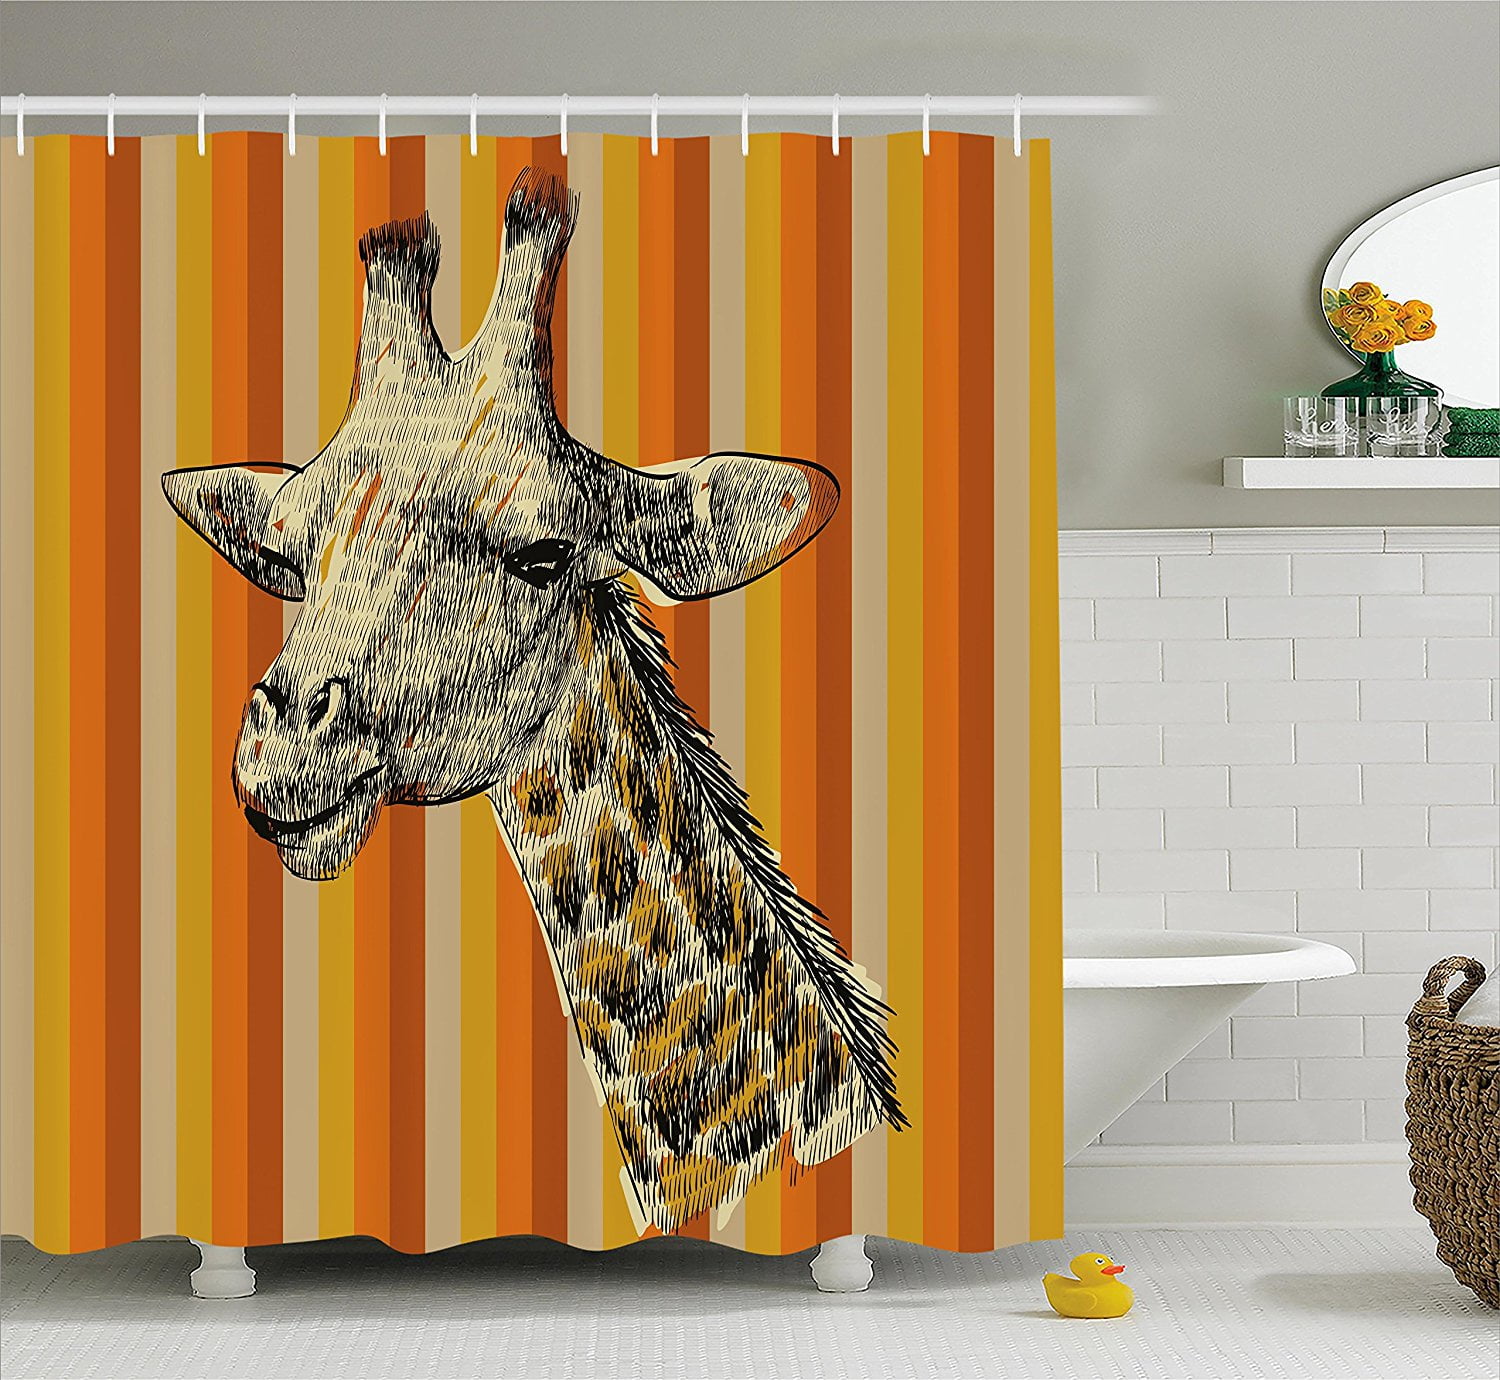 Details about   Sketch Giraffe African Jungle Animals Waterproof Fabric Shower Curtain Set 72" 